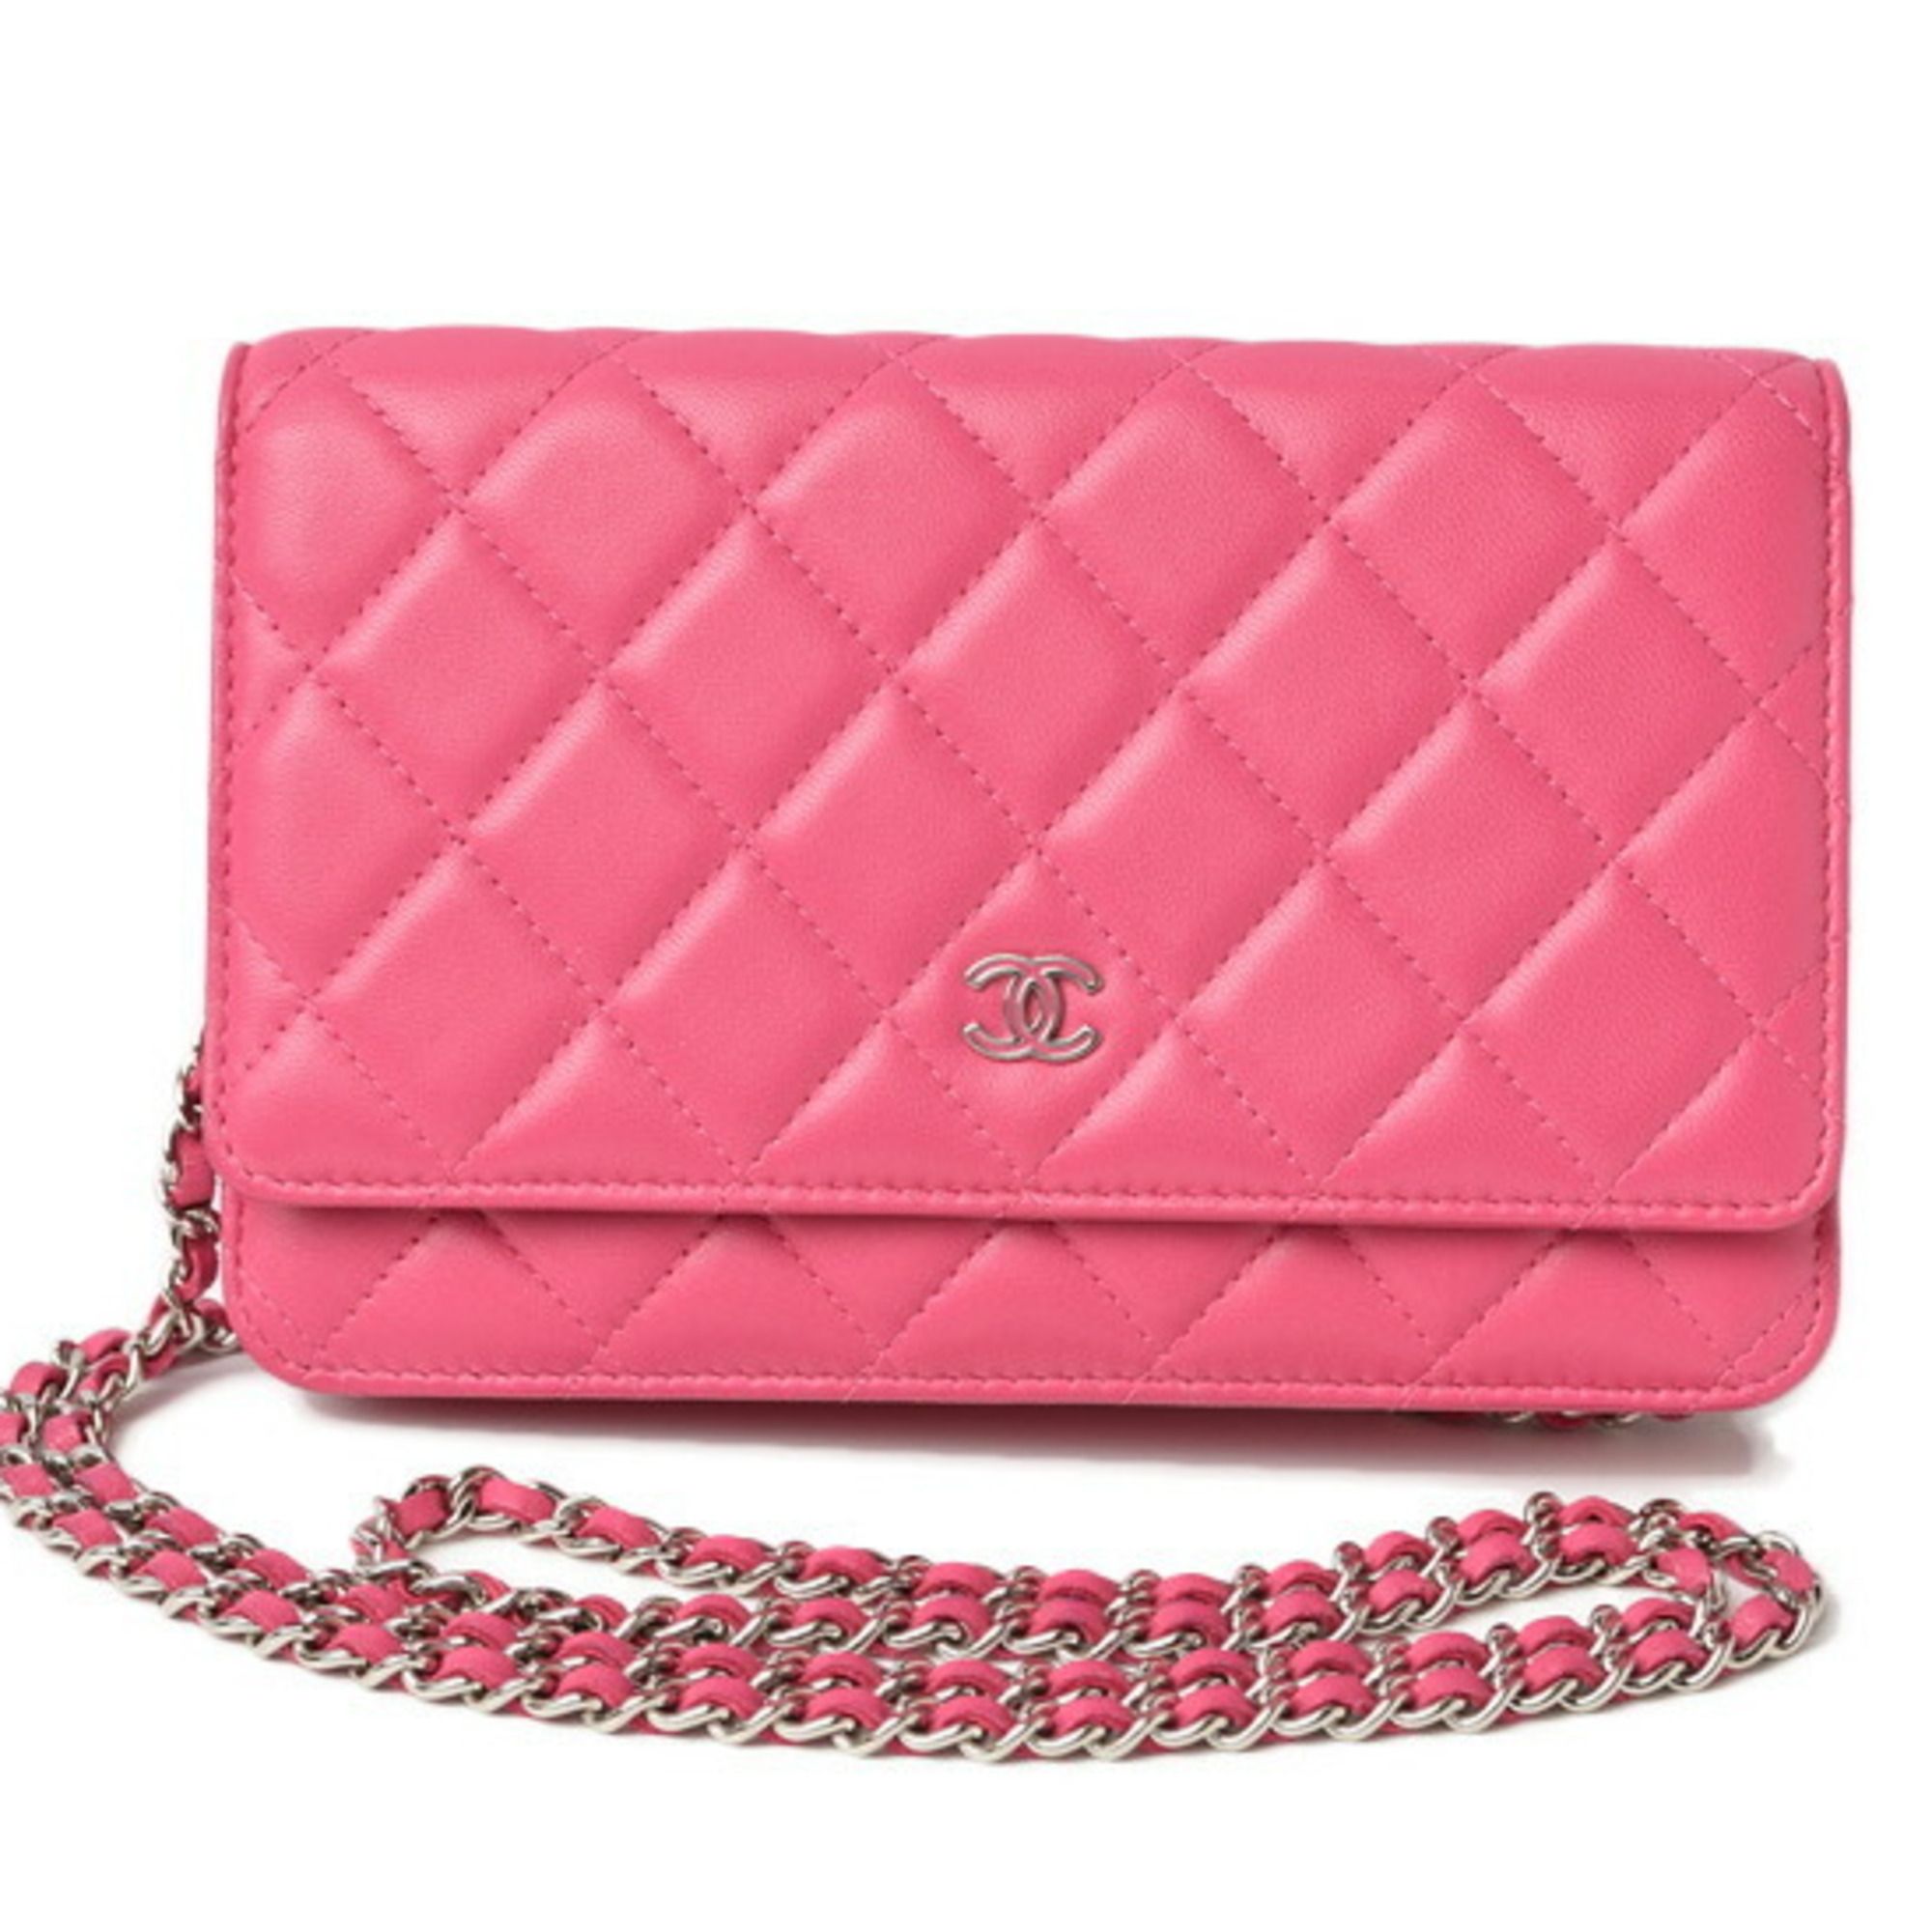 Chanel Chanel chain shoulder bag long wallet clutch CHANEL